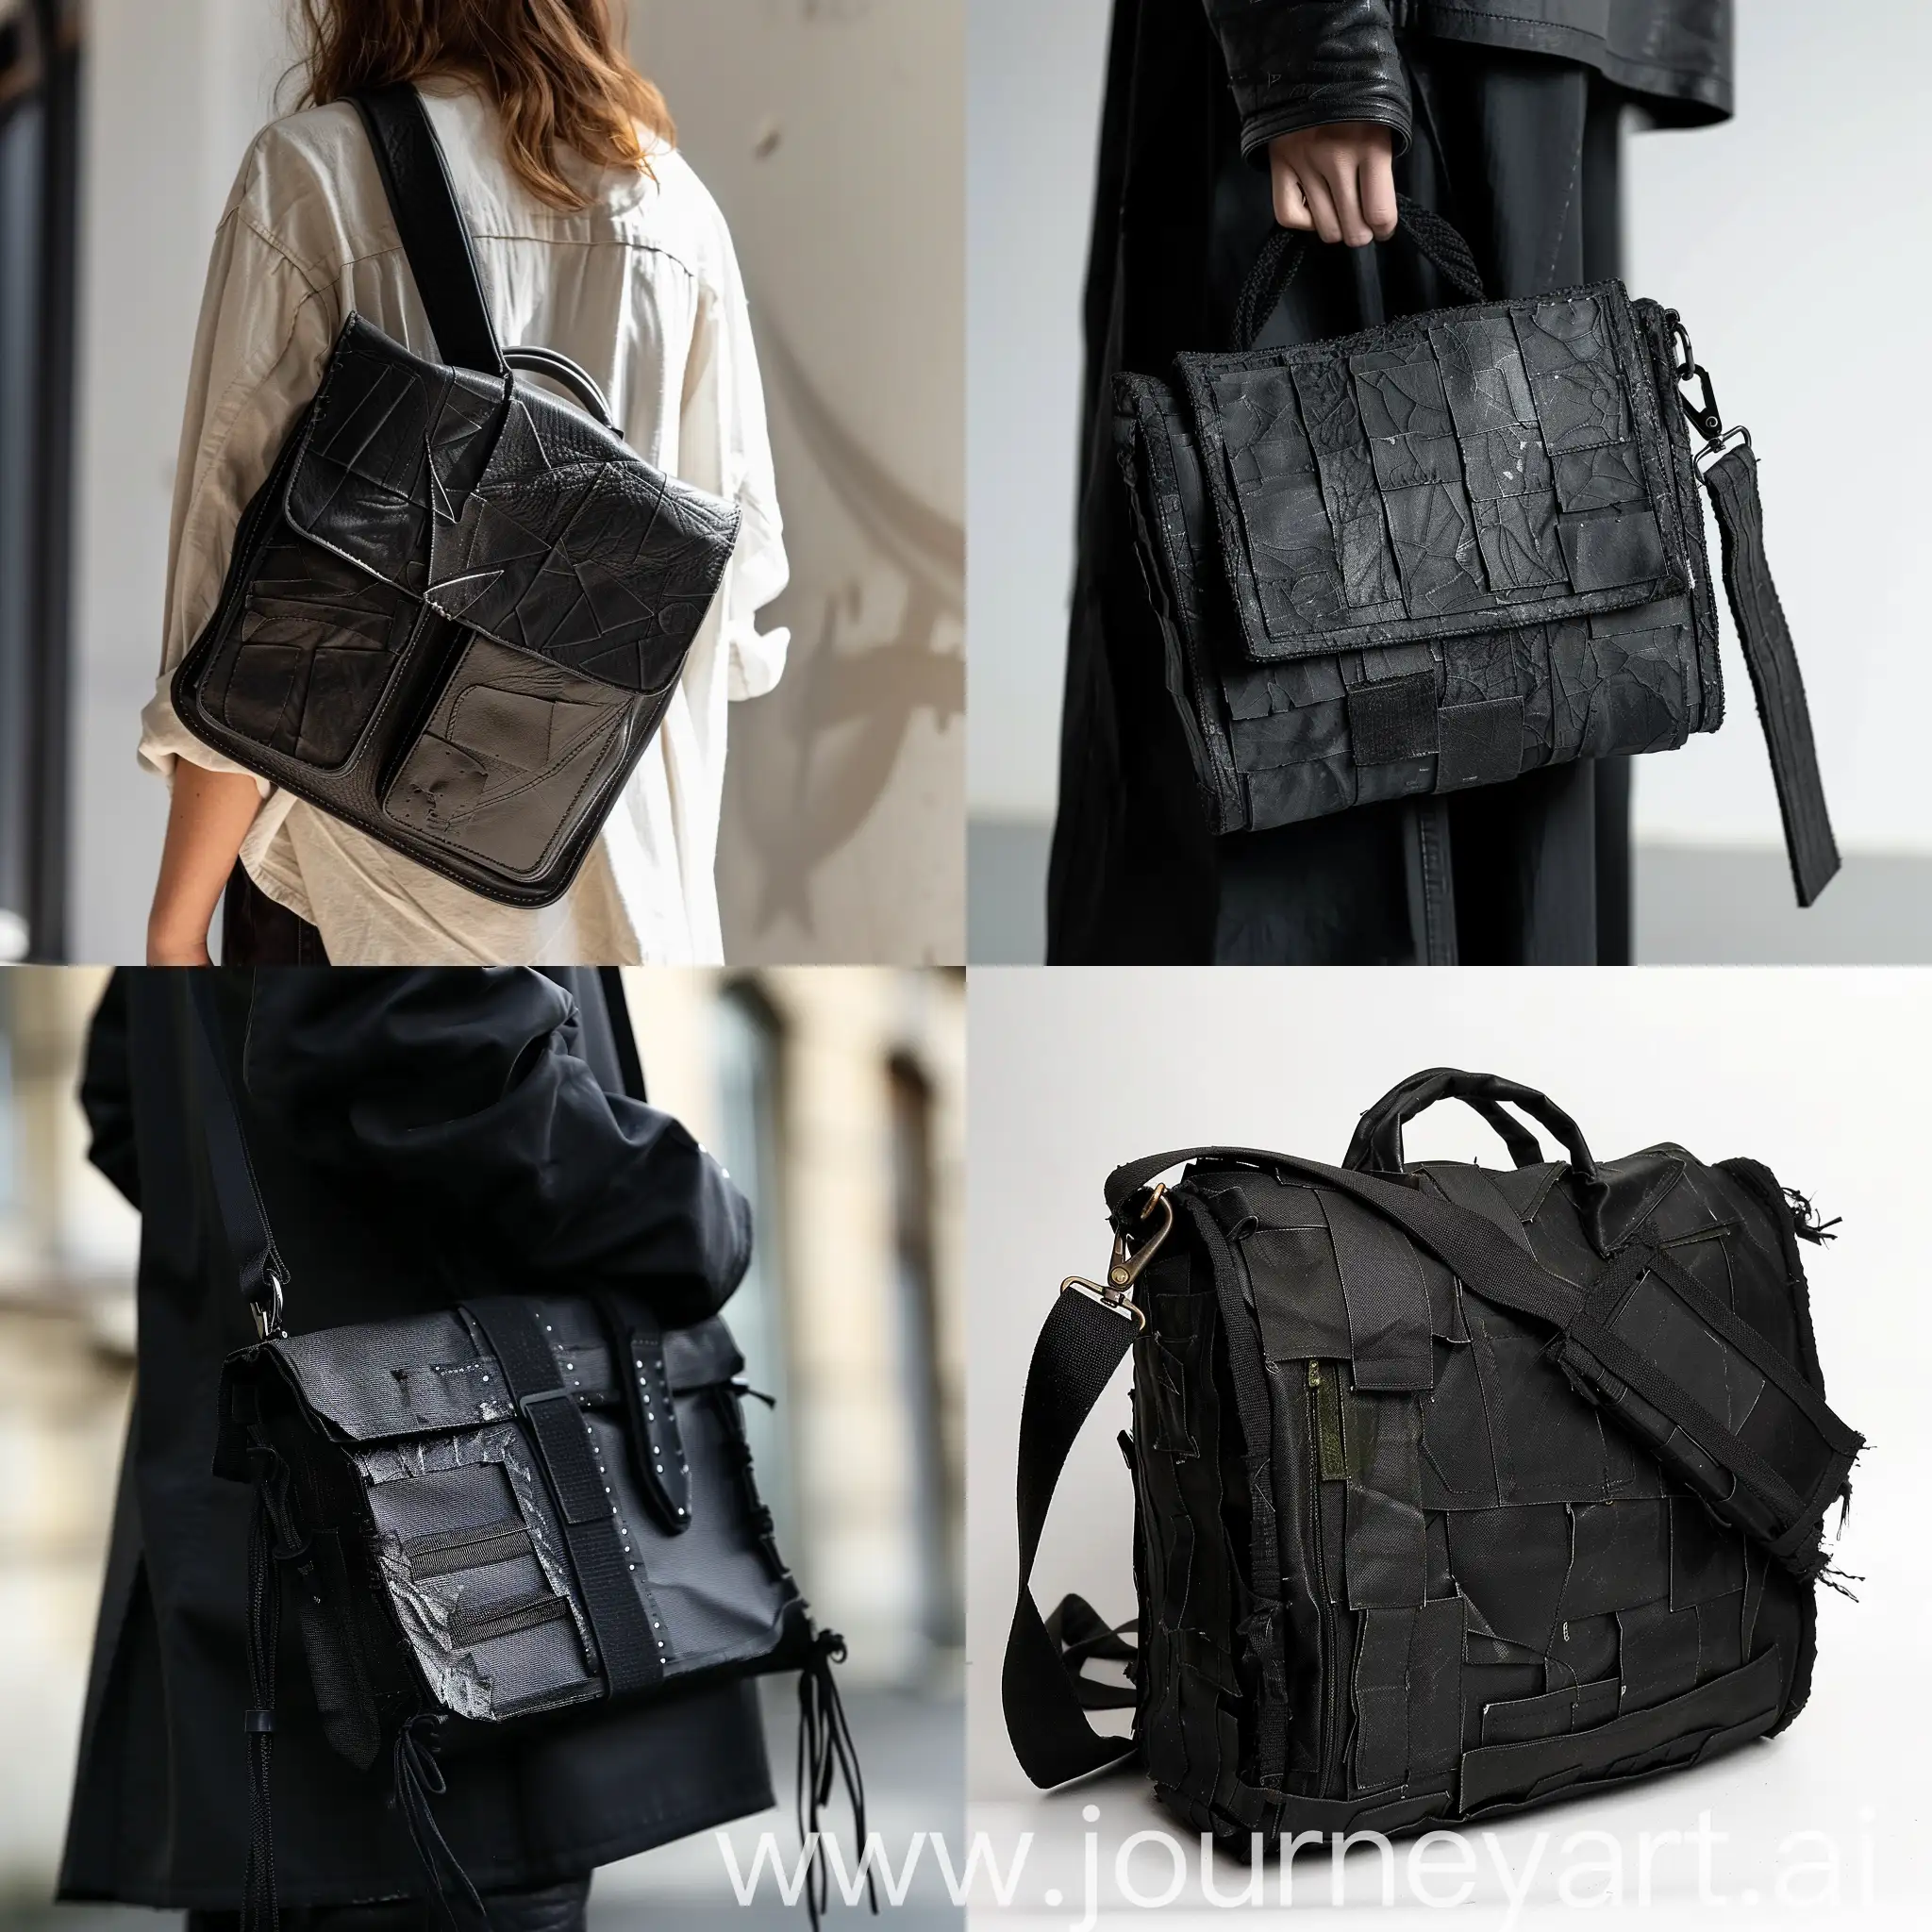  unique high fashion black unisex shoulder bag inspired by Maison Margiela with unusual pieces vintage 